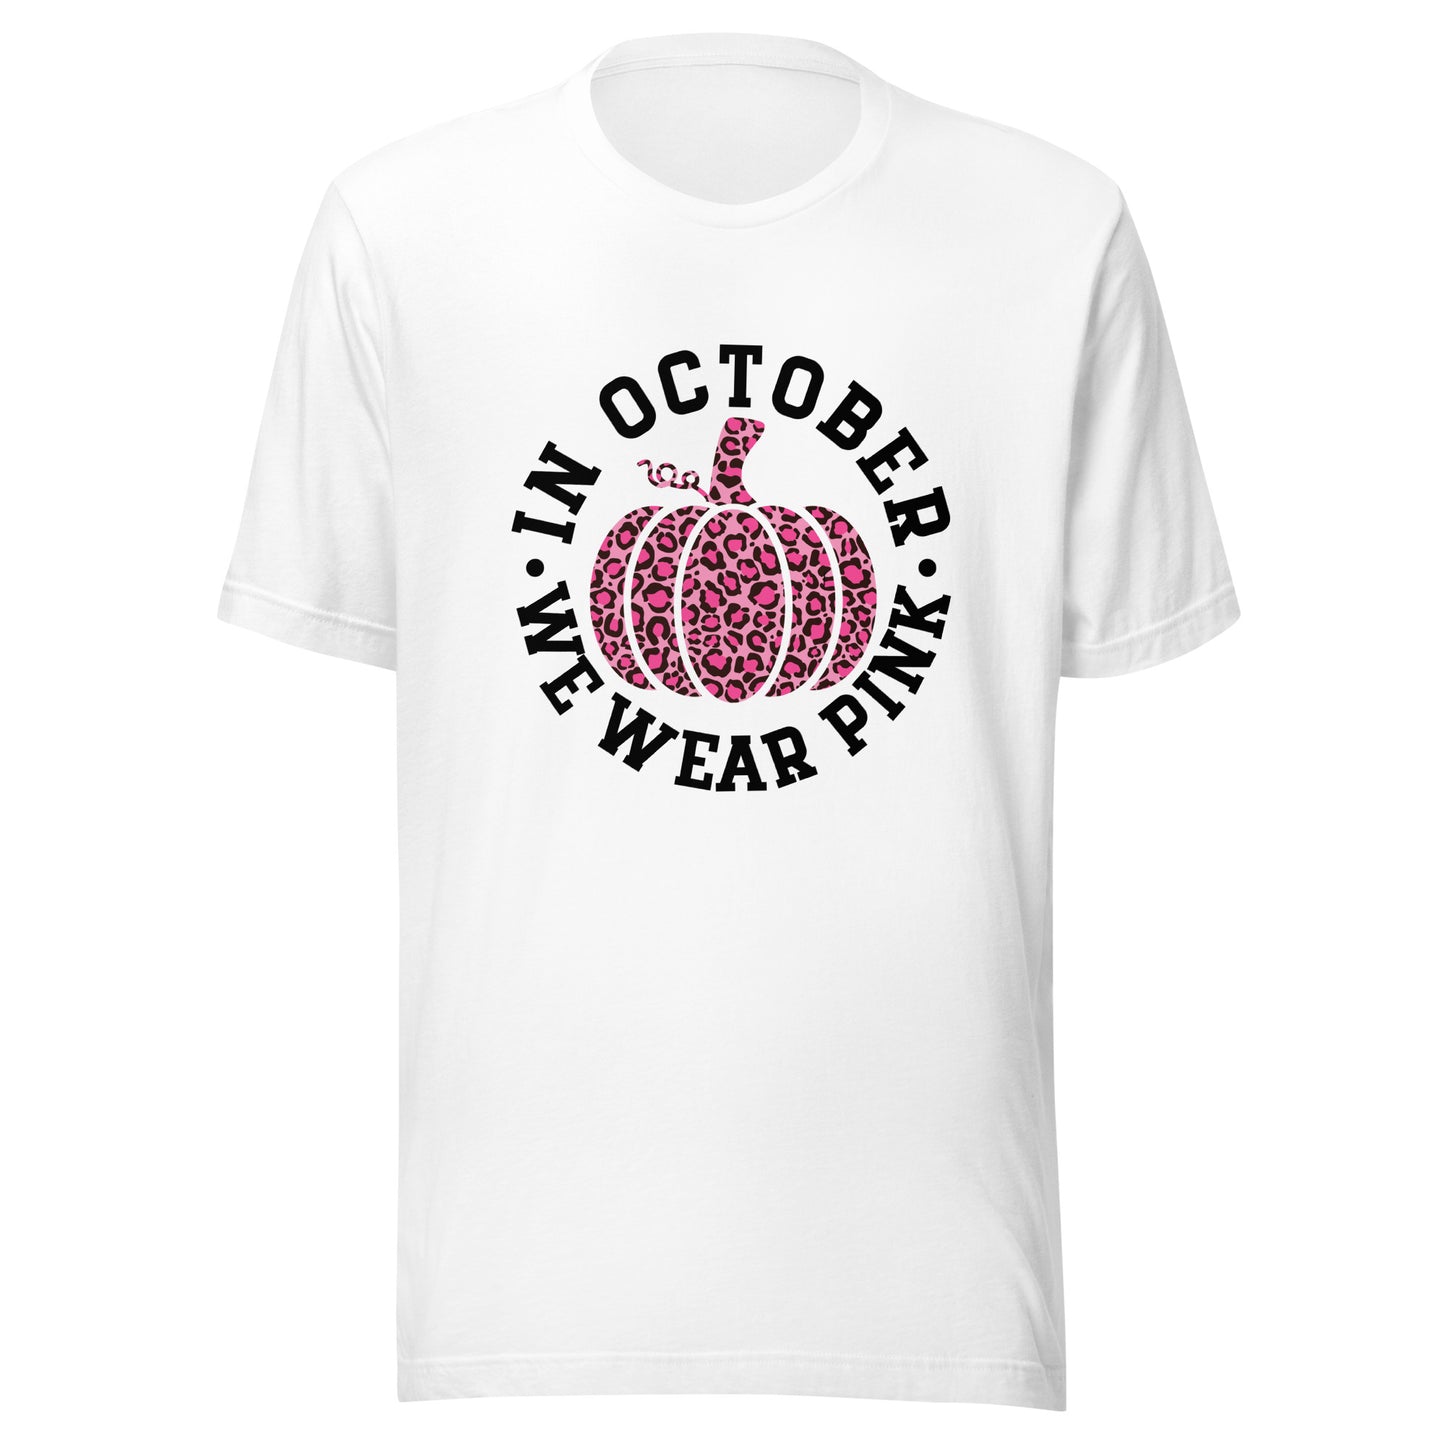 October We Wear Pink and Black Leopard Print Pumpkin - Breast Cancer Awareness Unisex T-shirt